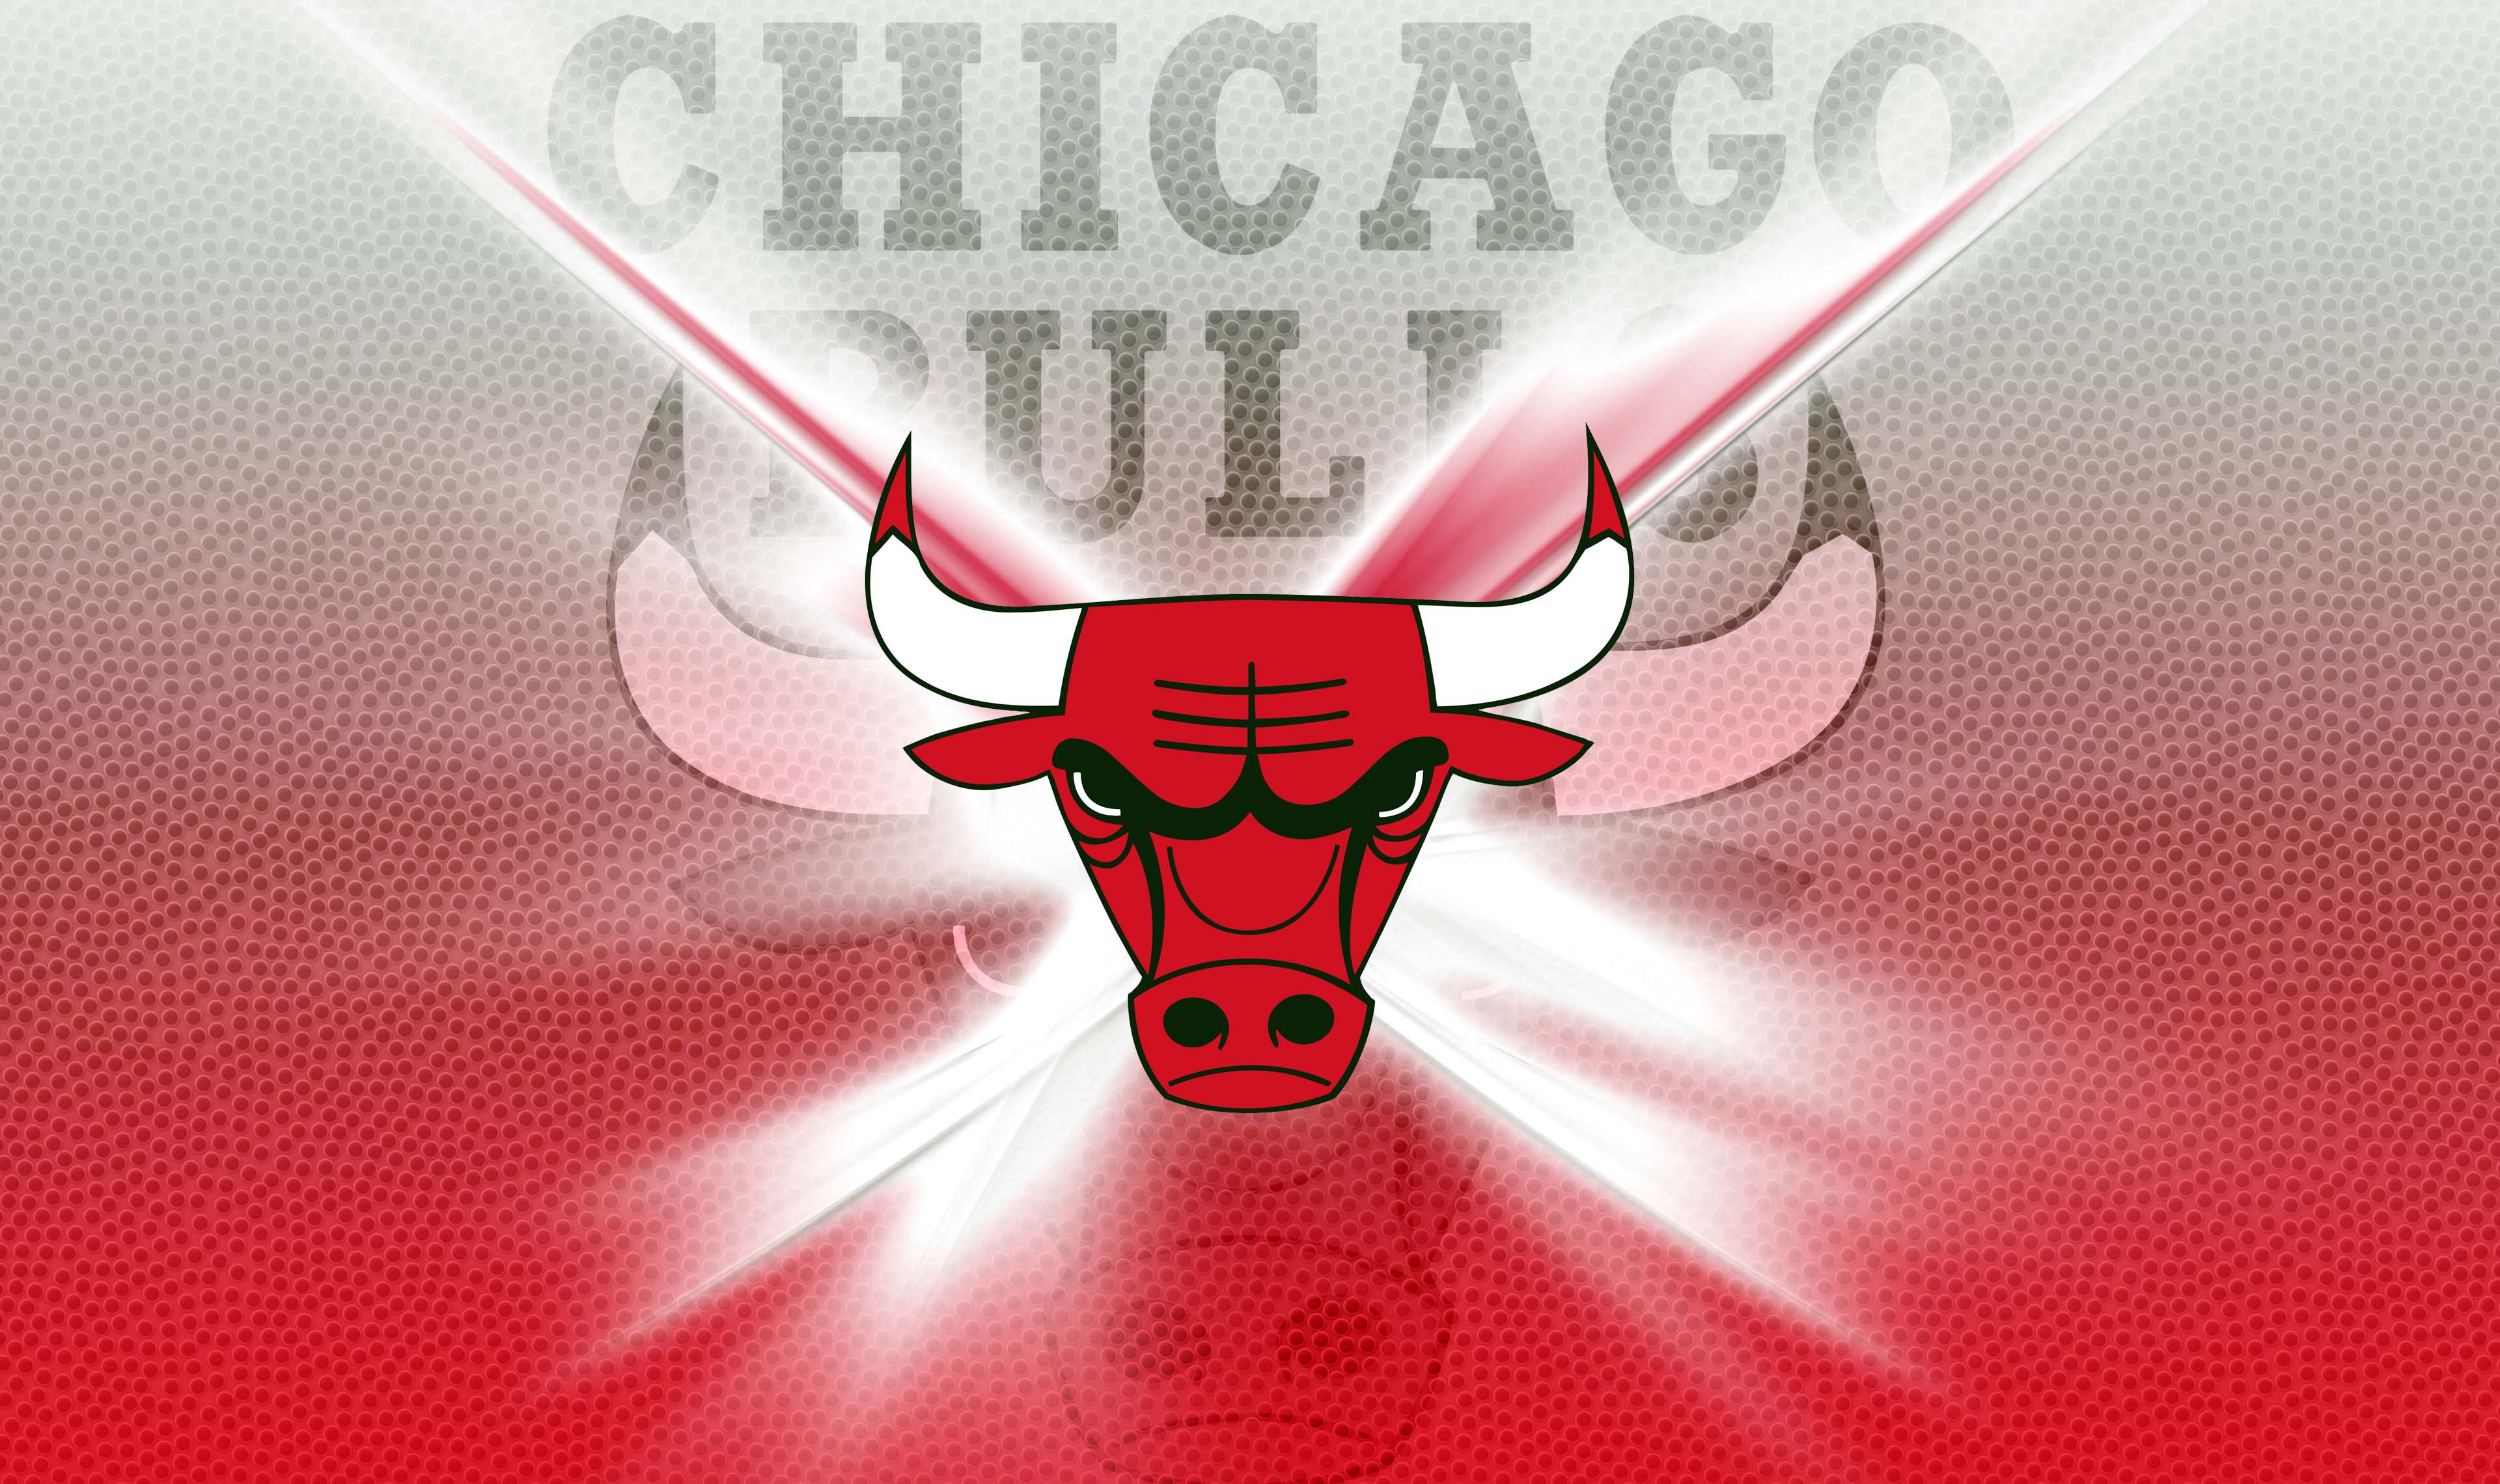 Chicago Bulls HD Image For Desktop